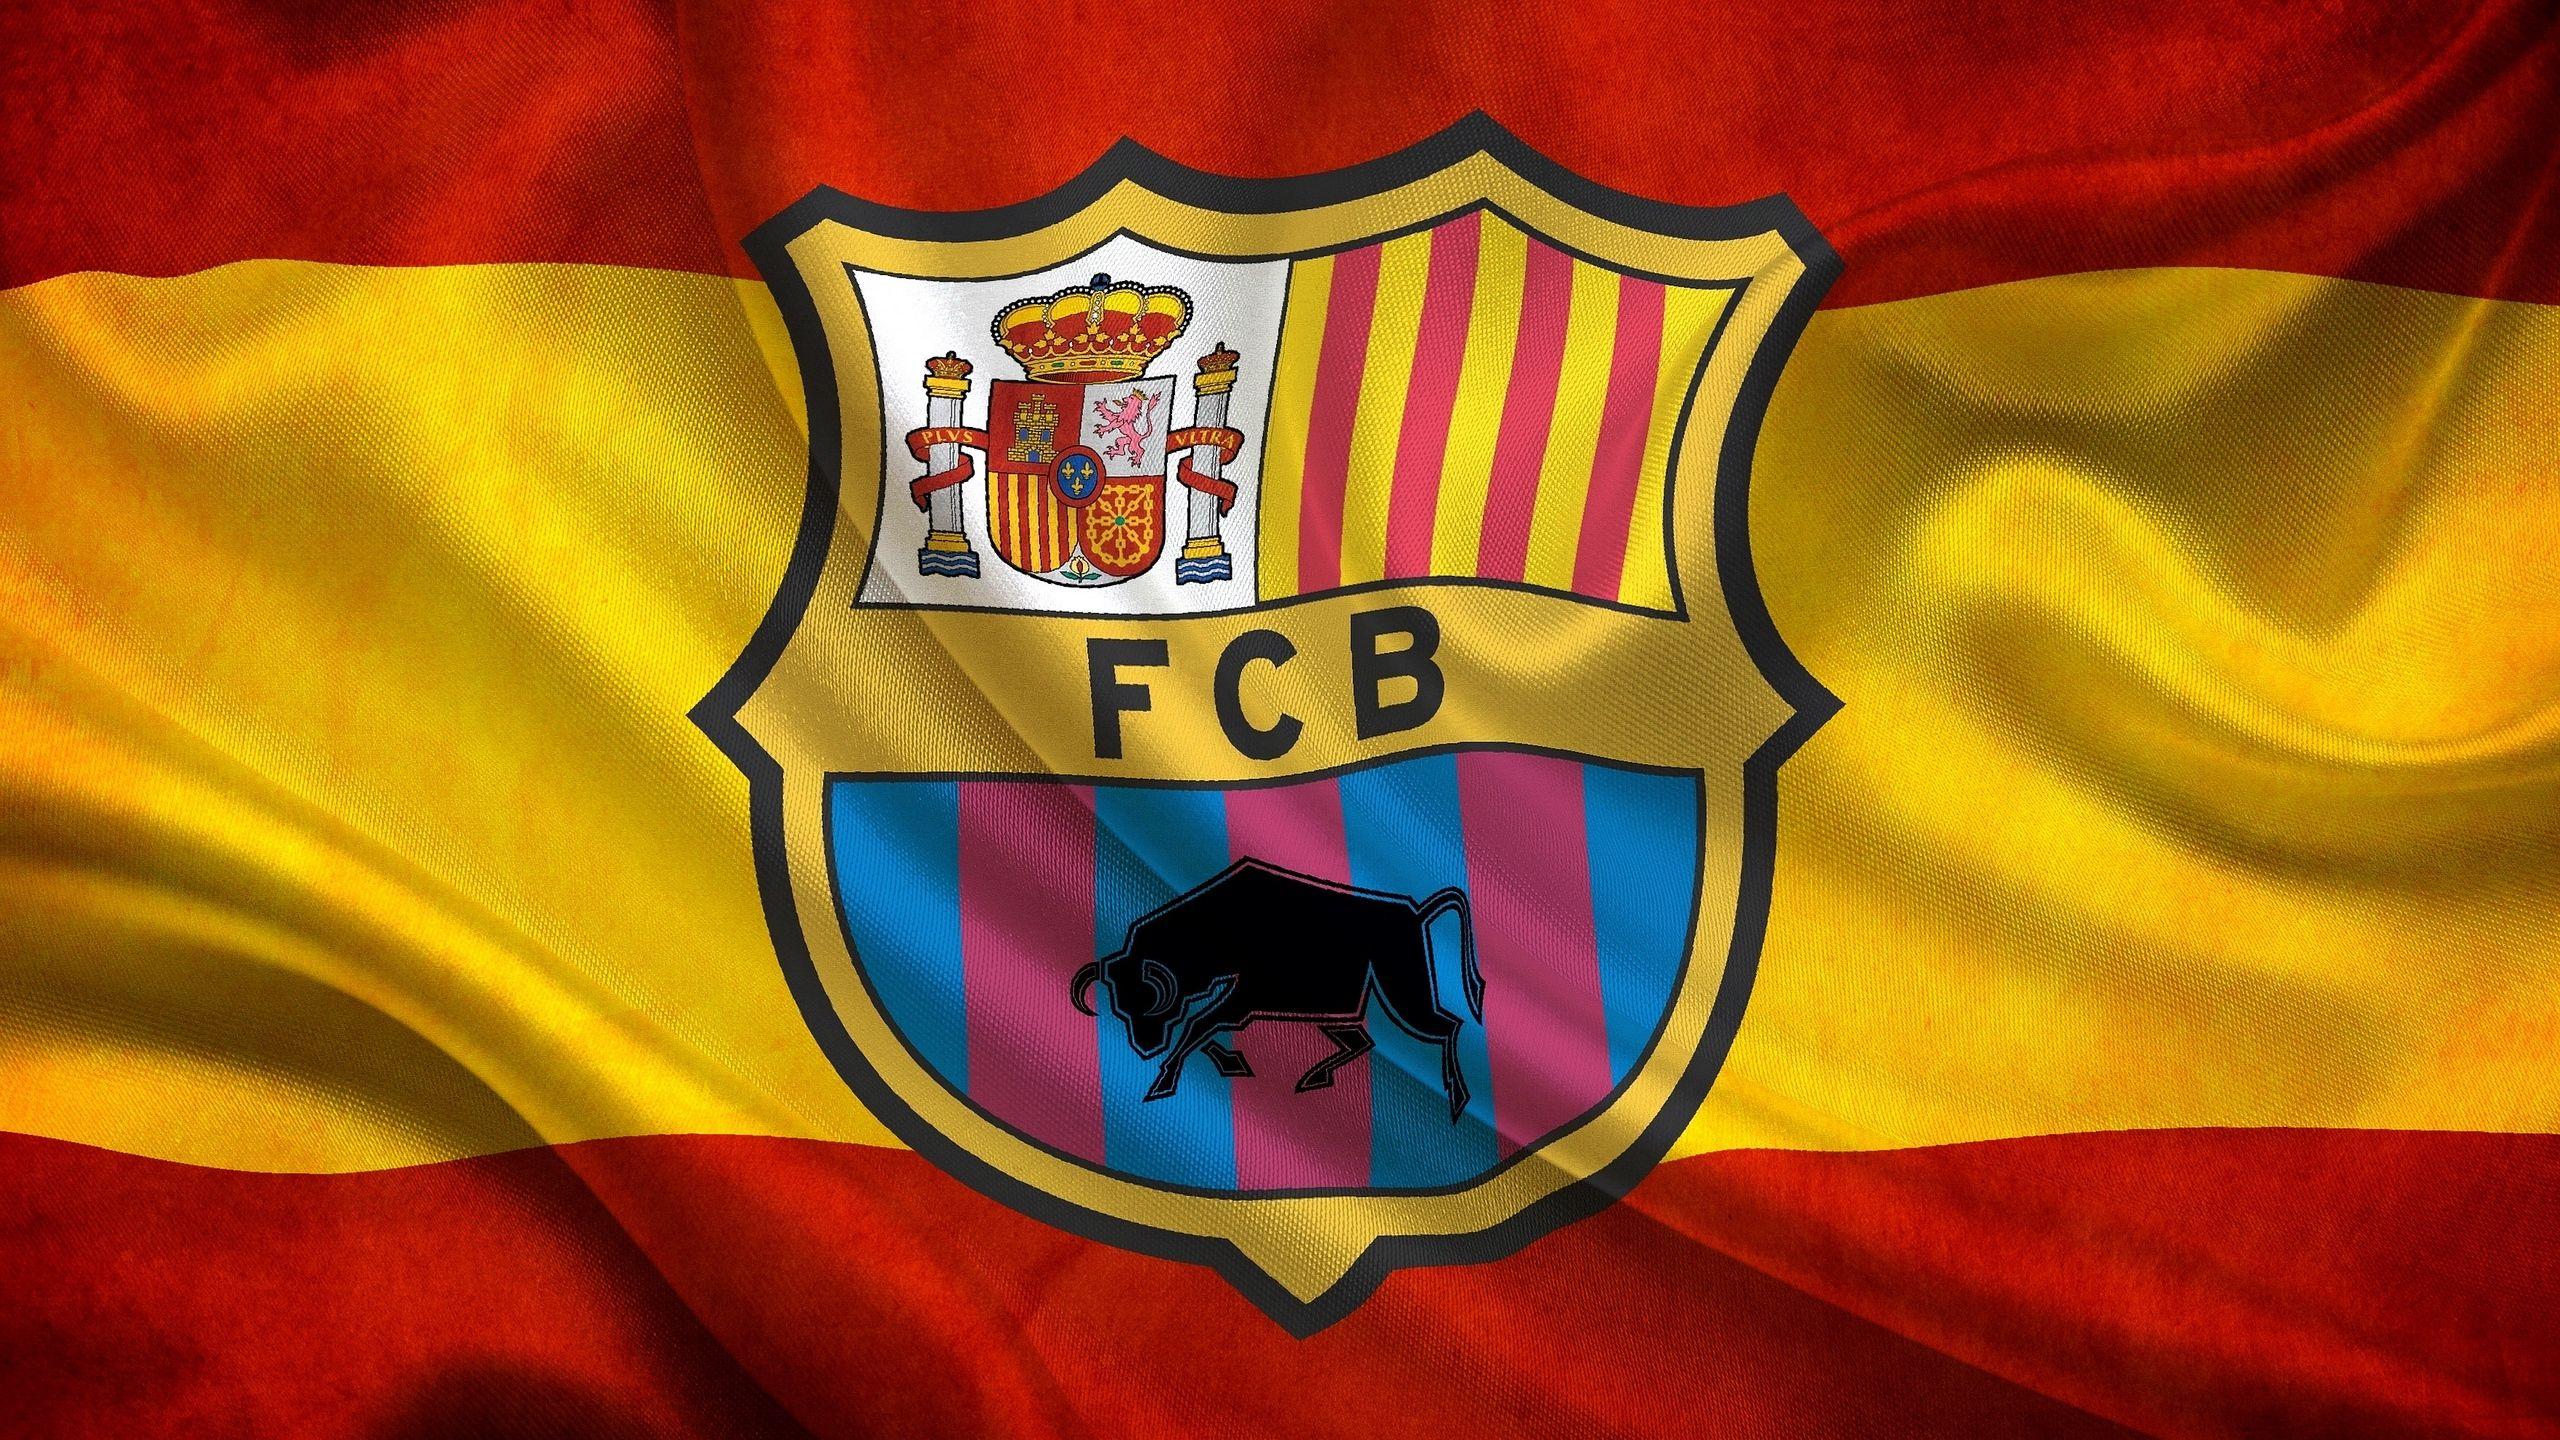 Download wallpaper 2560x1440 soccer, flag, fc barcelona, barca